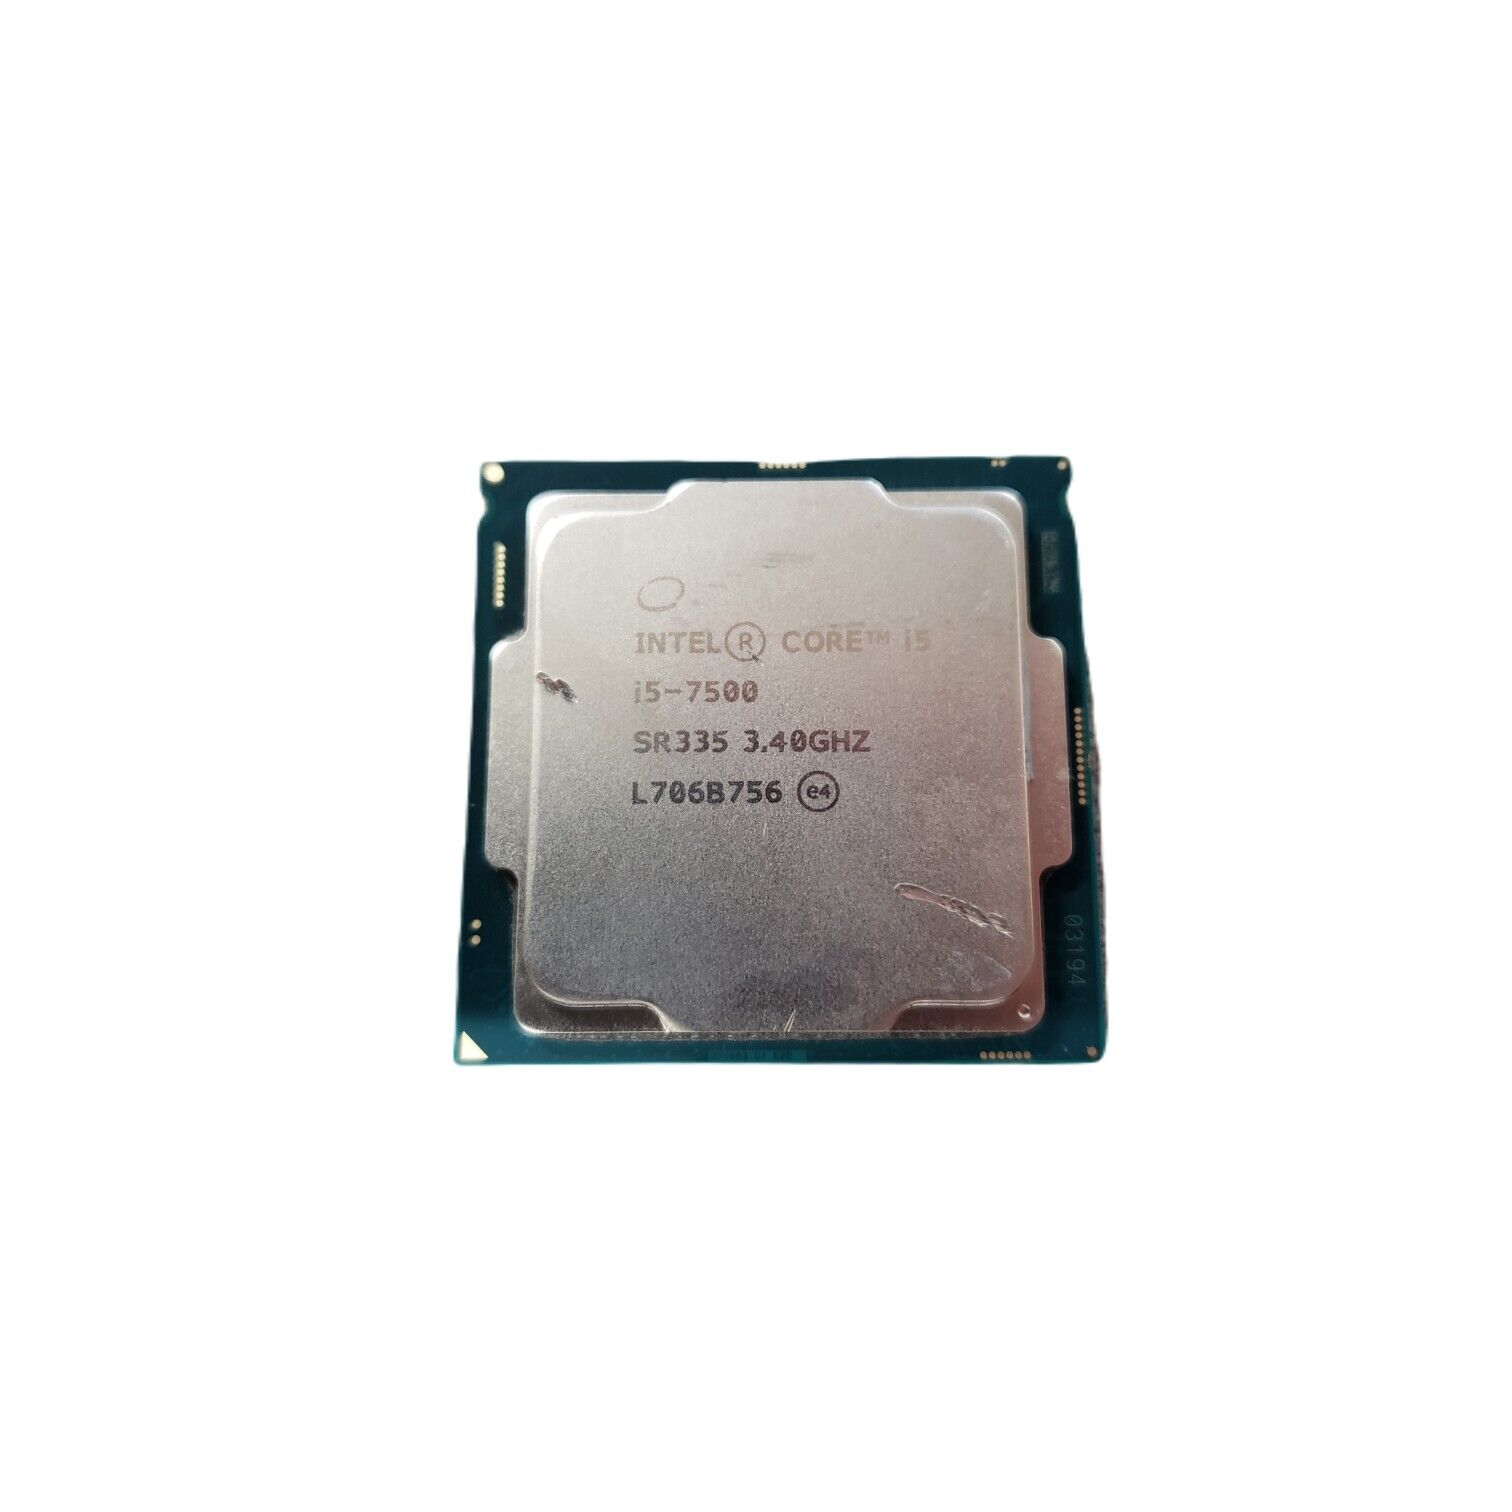 [ Lot Of 2 ] Intel i5-7500 SR335 3.40GHZ Processor